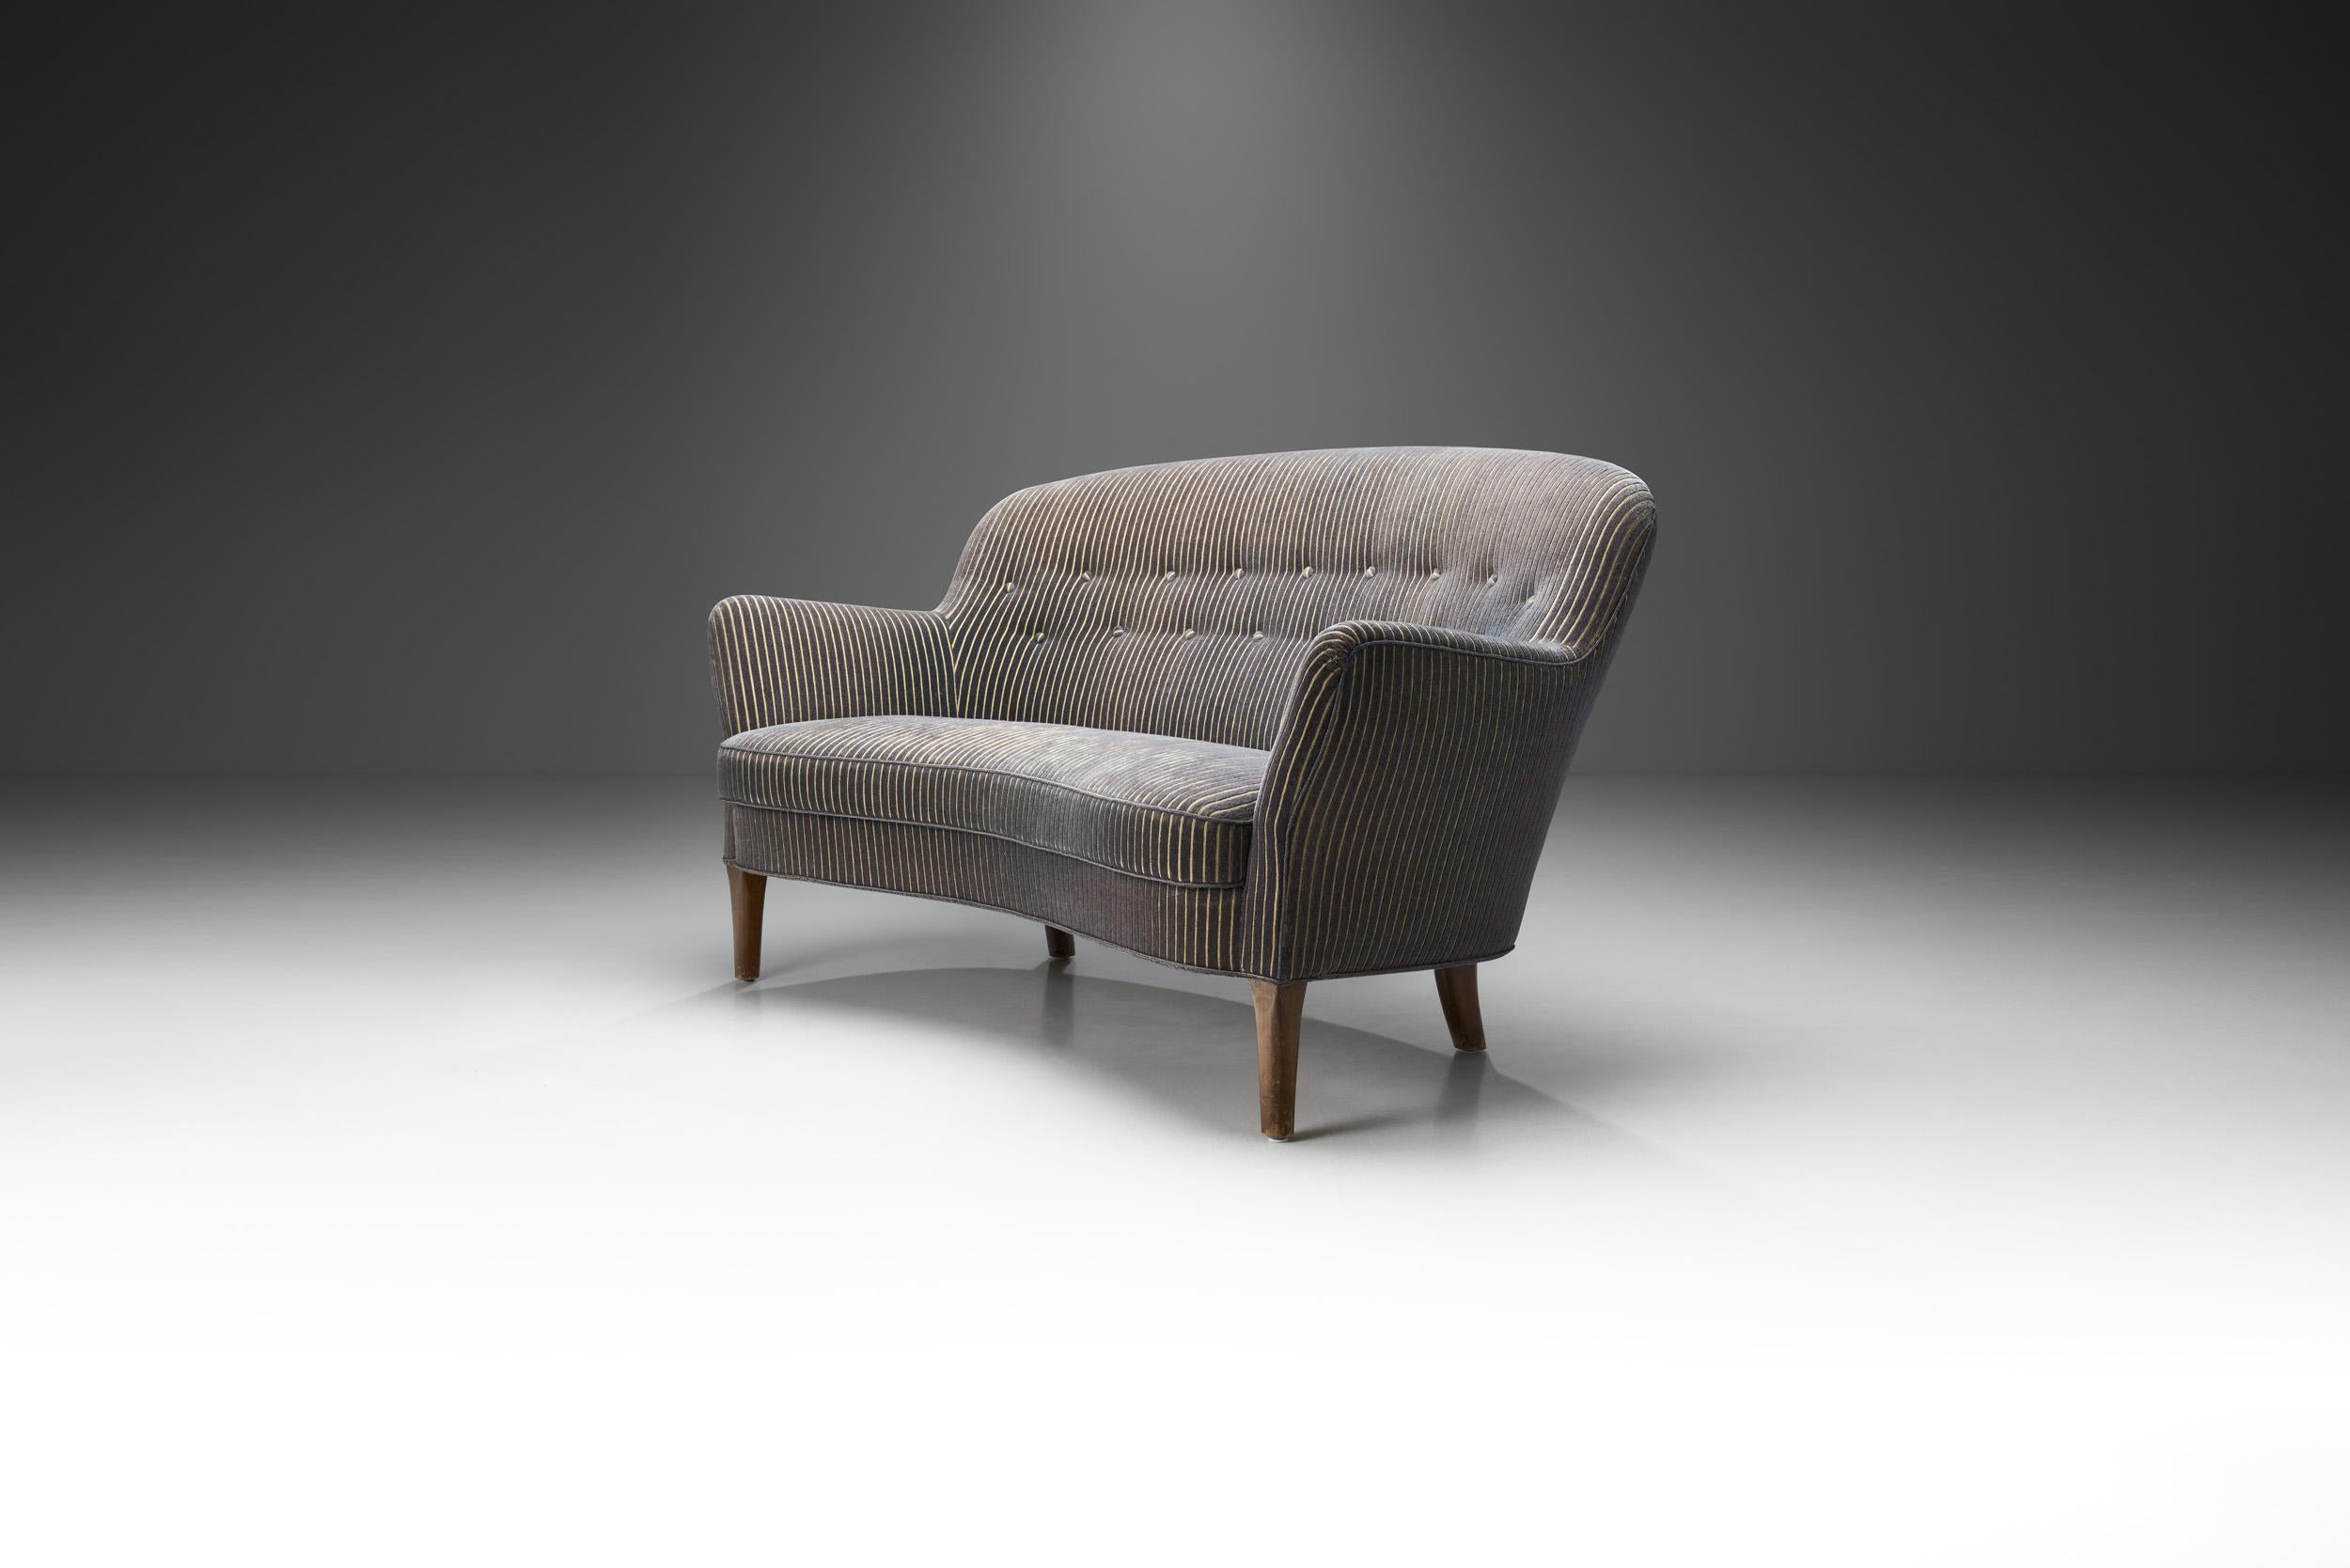 Scandinavian Modern Danish Cabinetmaker Two-Seater Sofa with Striped Upholstery, Denmark 1940s For Sale